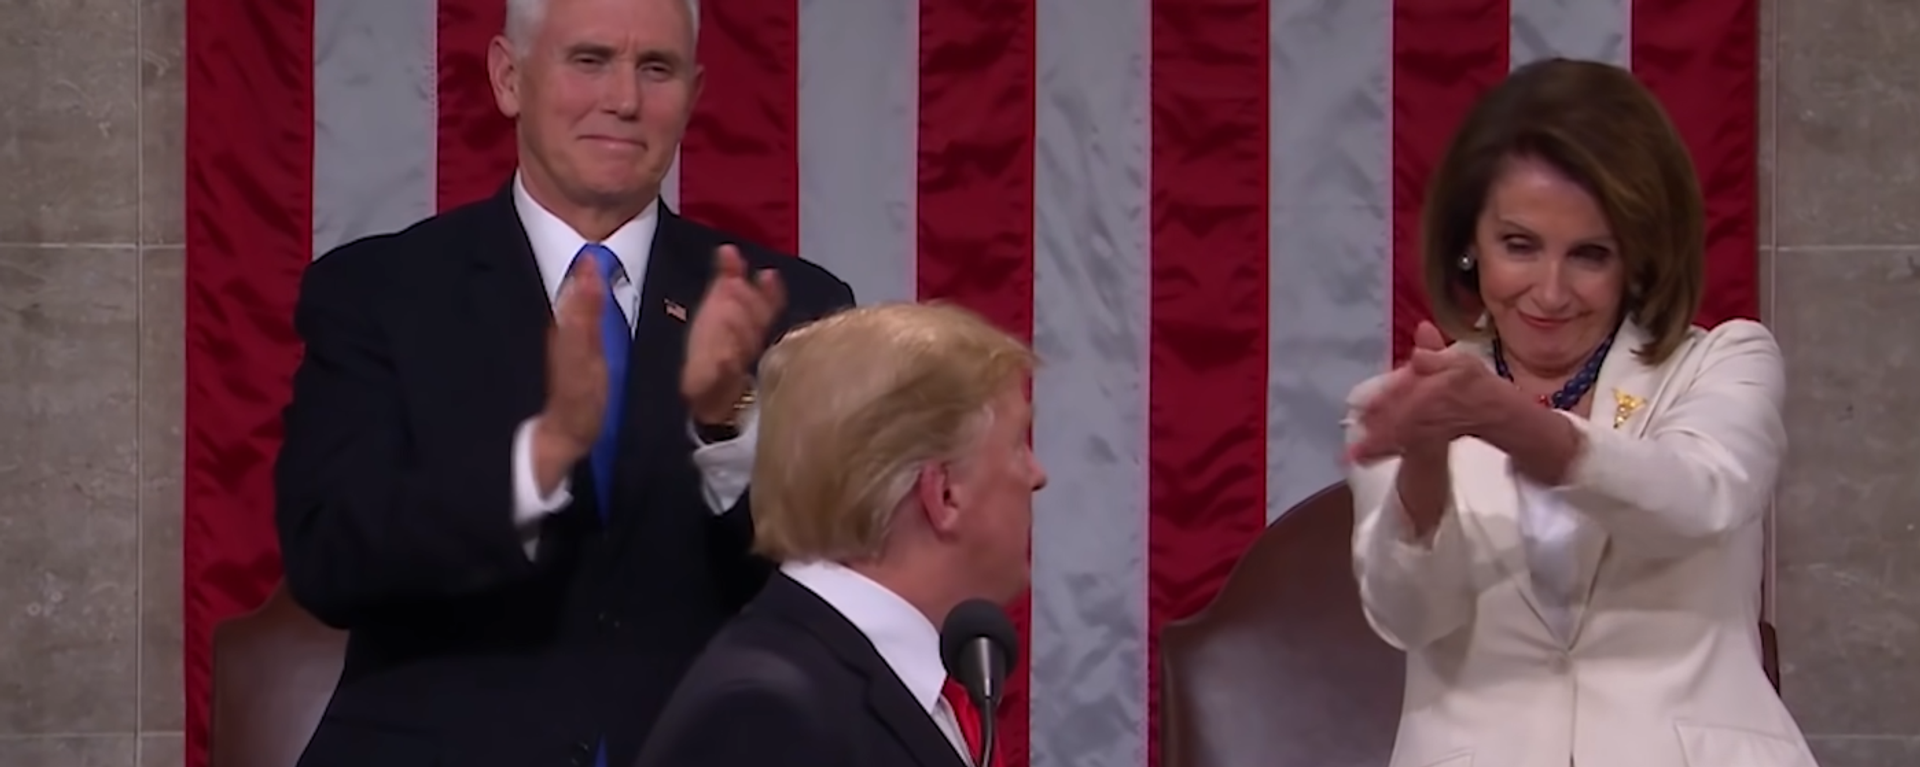 Nancy Pelosi claps for Donald Trump at State of the Union address. - Sputnik International, 1920, 14.09.2022